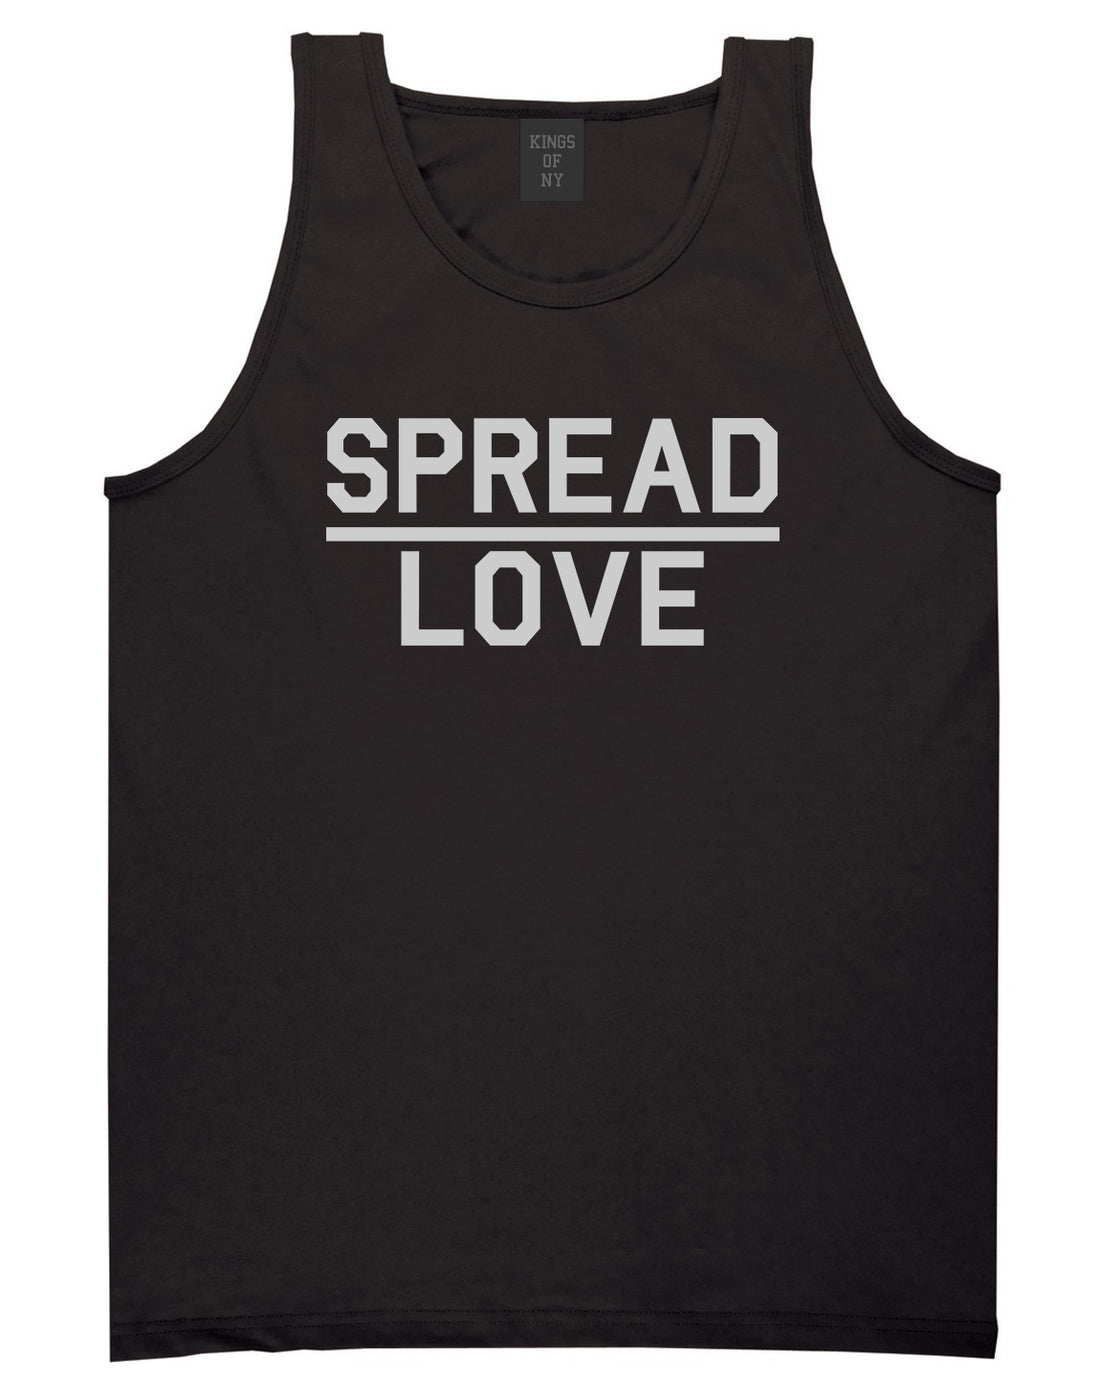 Spread Love Brooklyn Tank Top Shirt in Black